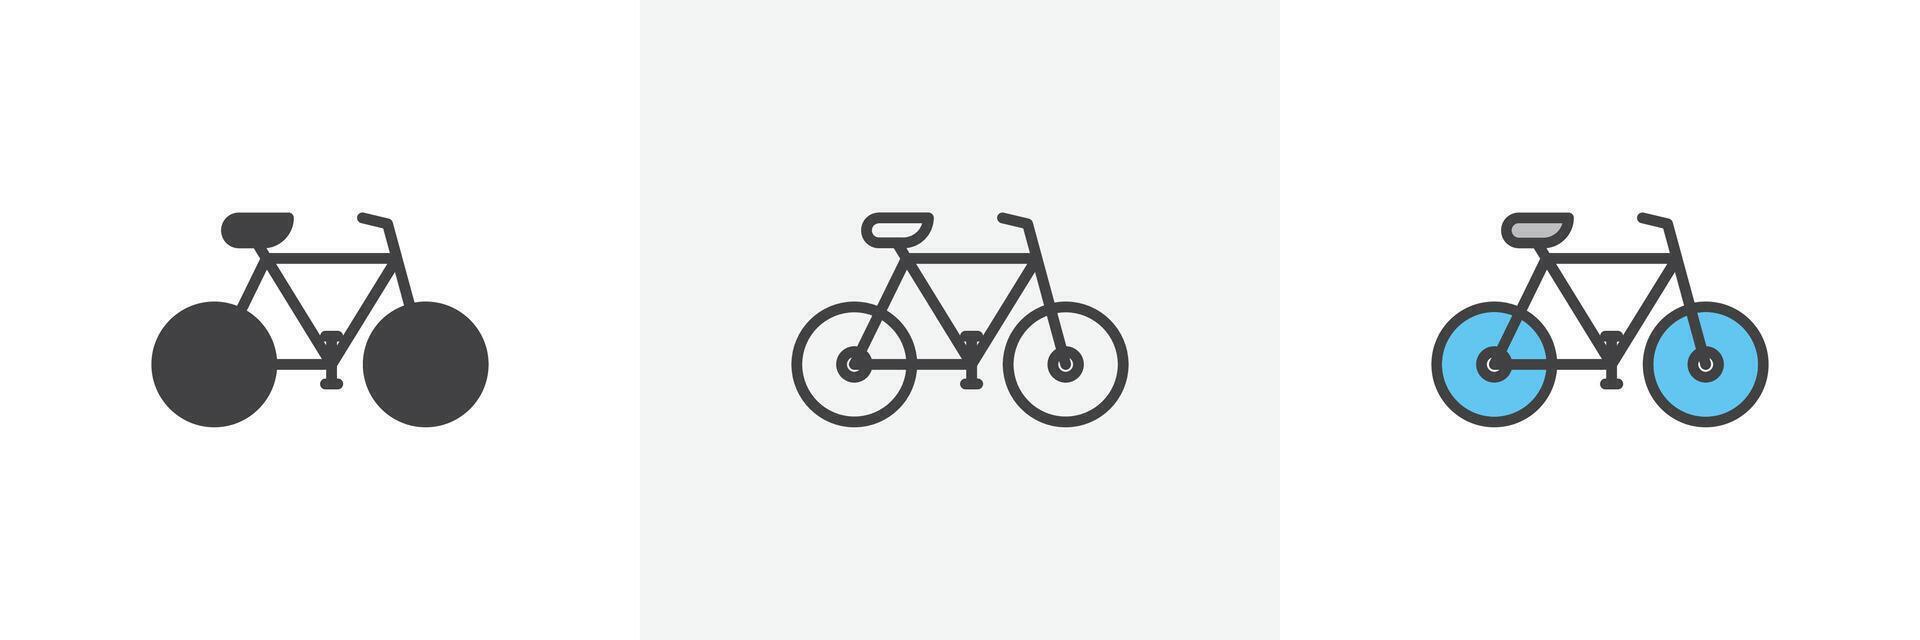 Bicycle icon set vector